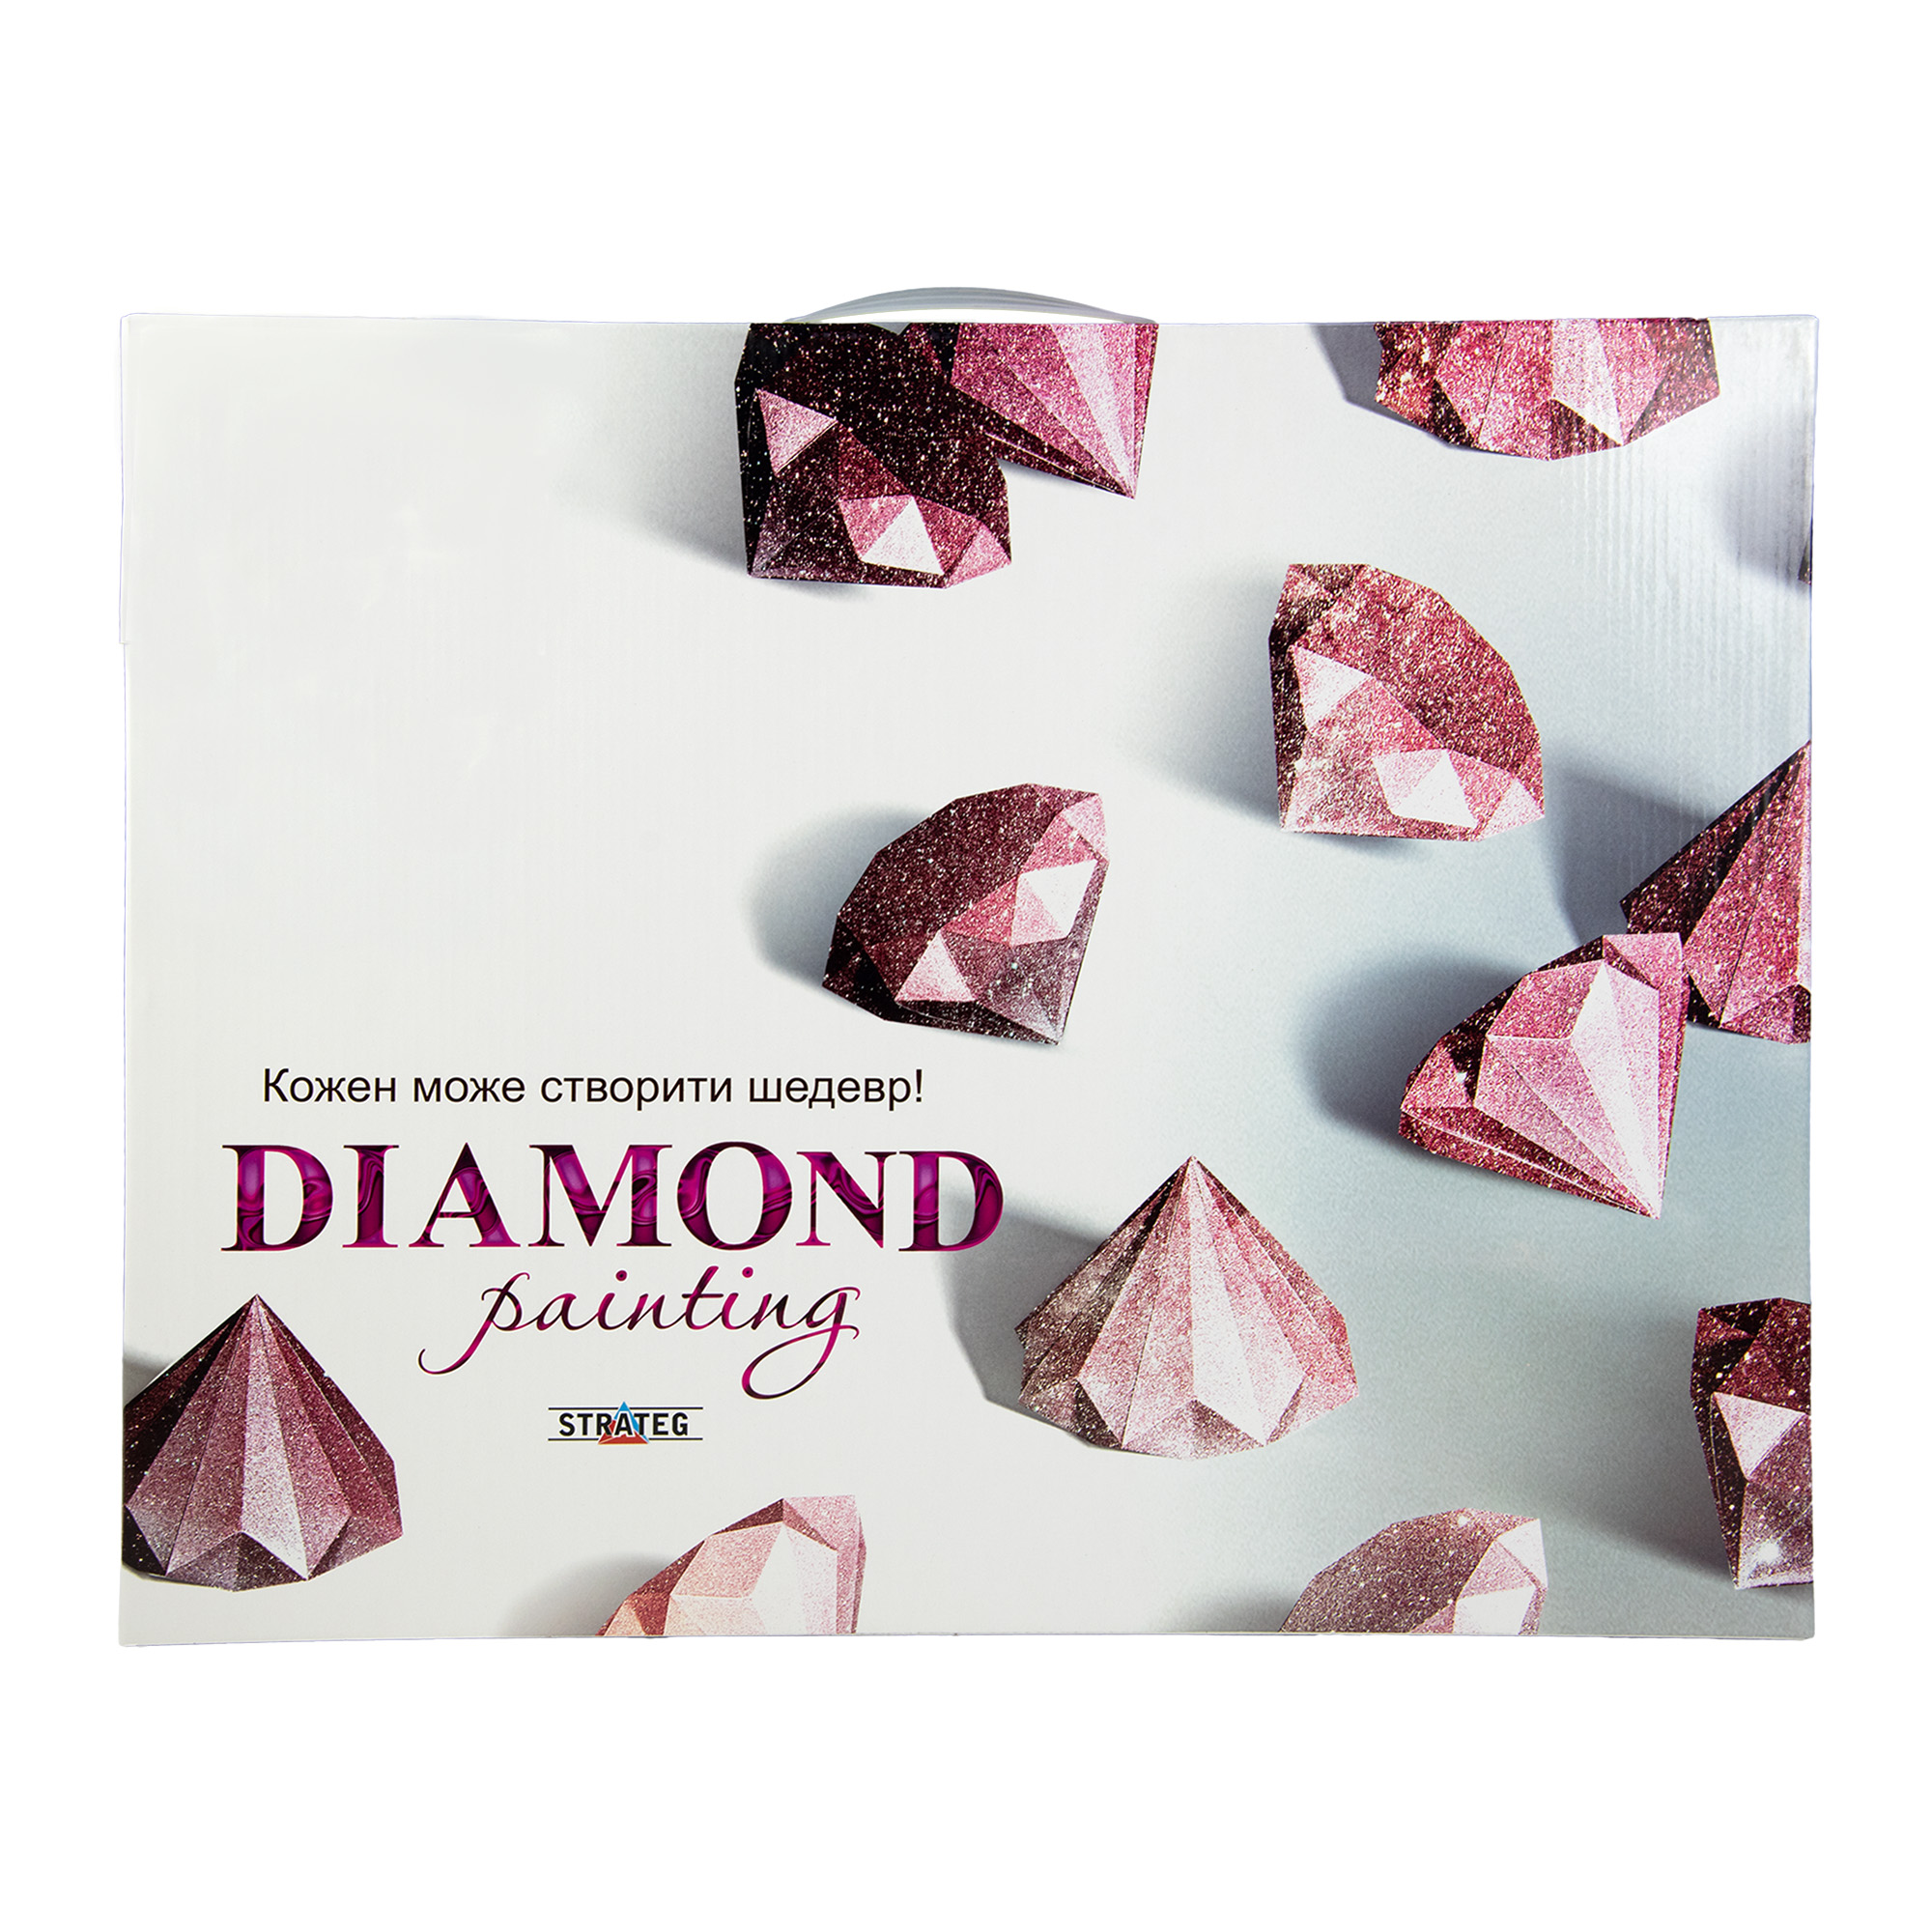 Diamond painting Strateg PREMIUM Doberman size 40х50 sm (L-081)